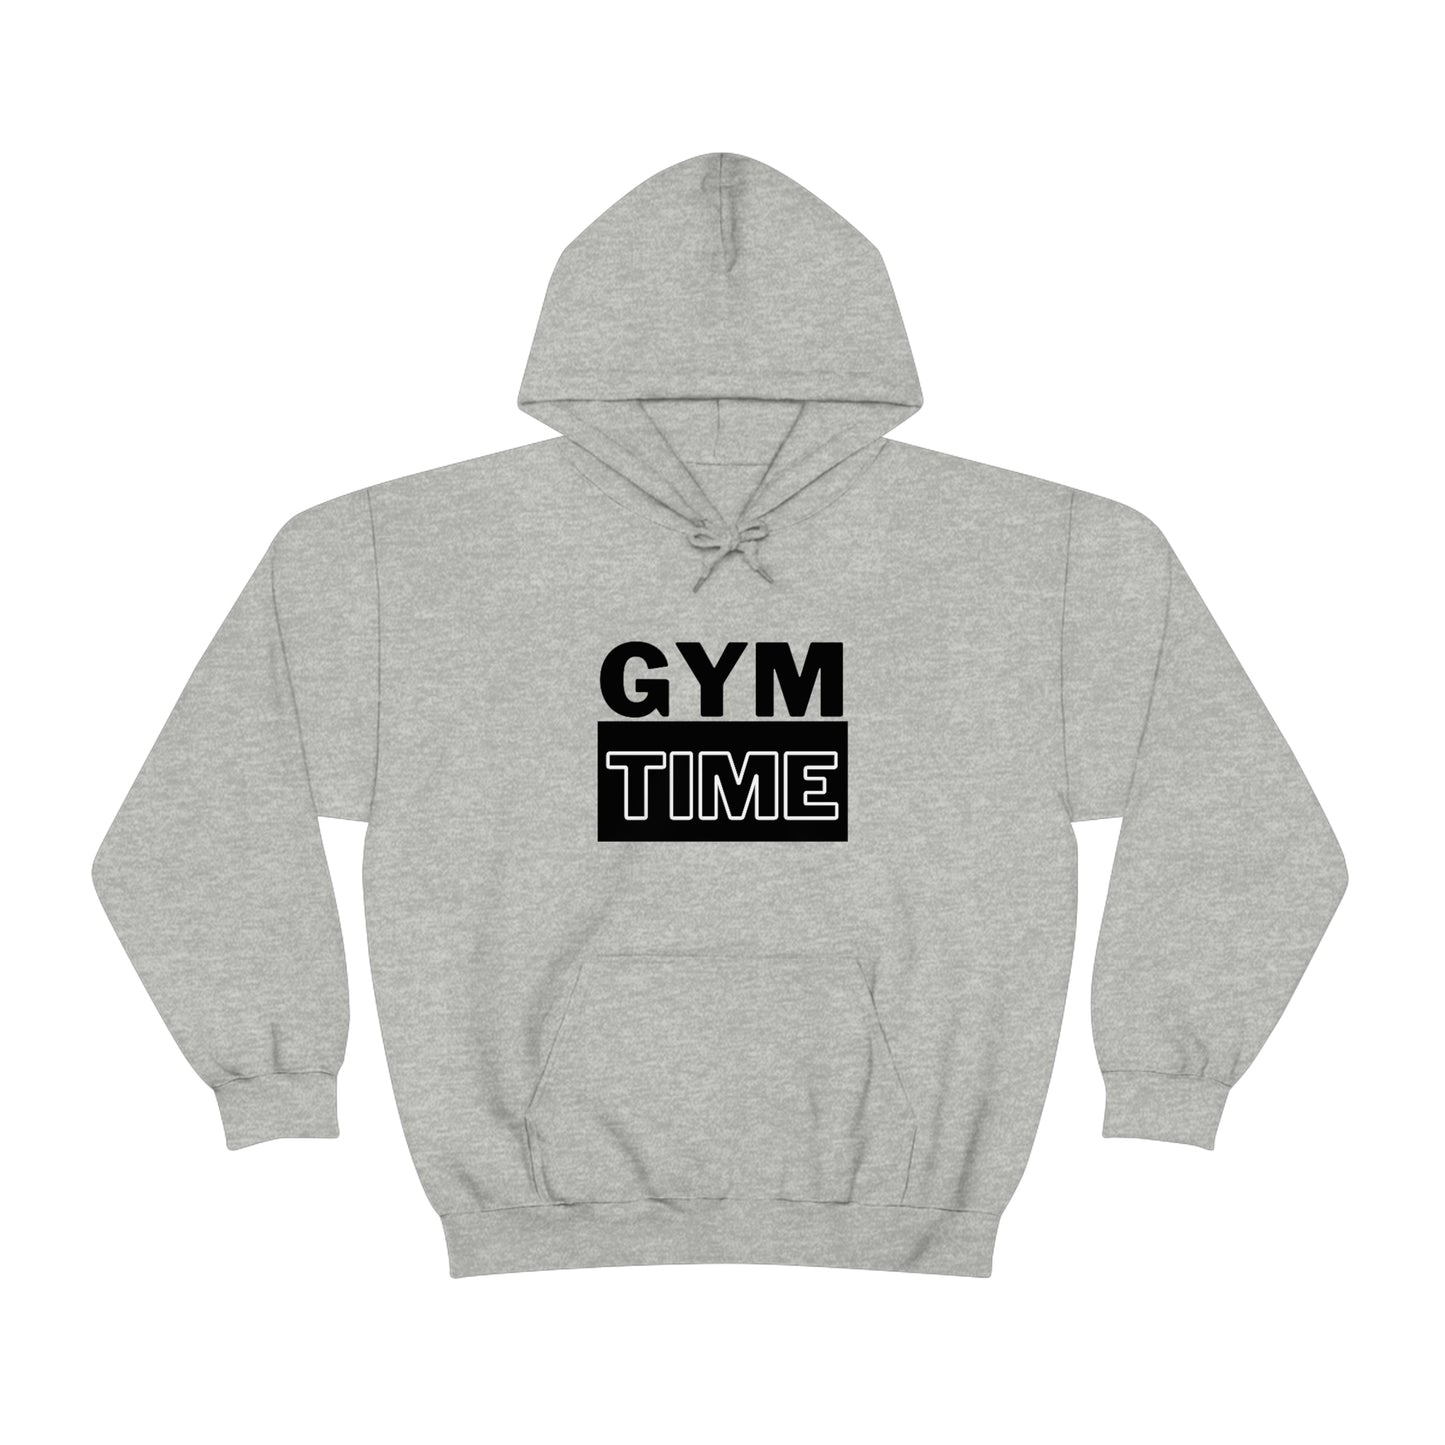 Gym Time Sweatshirt